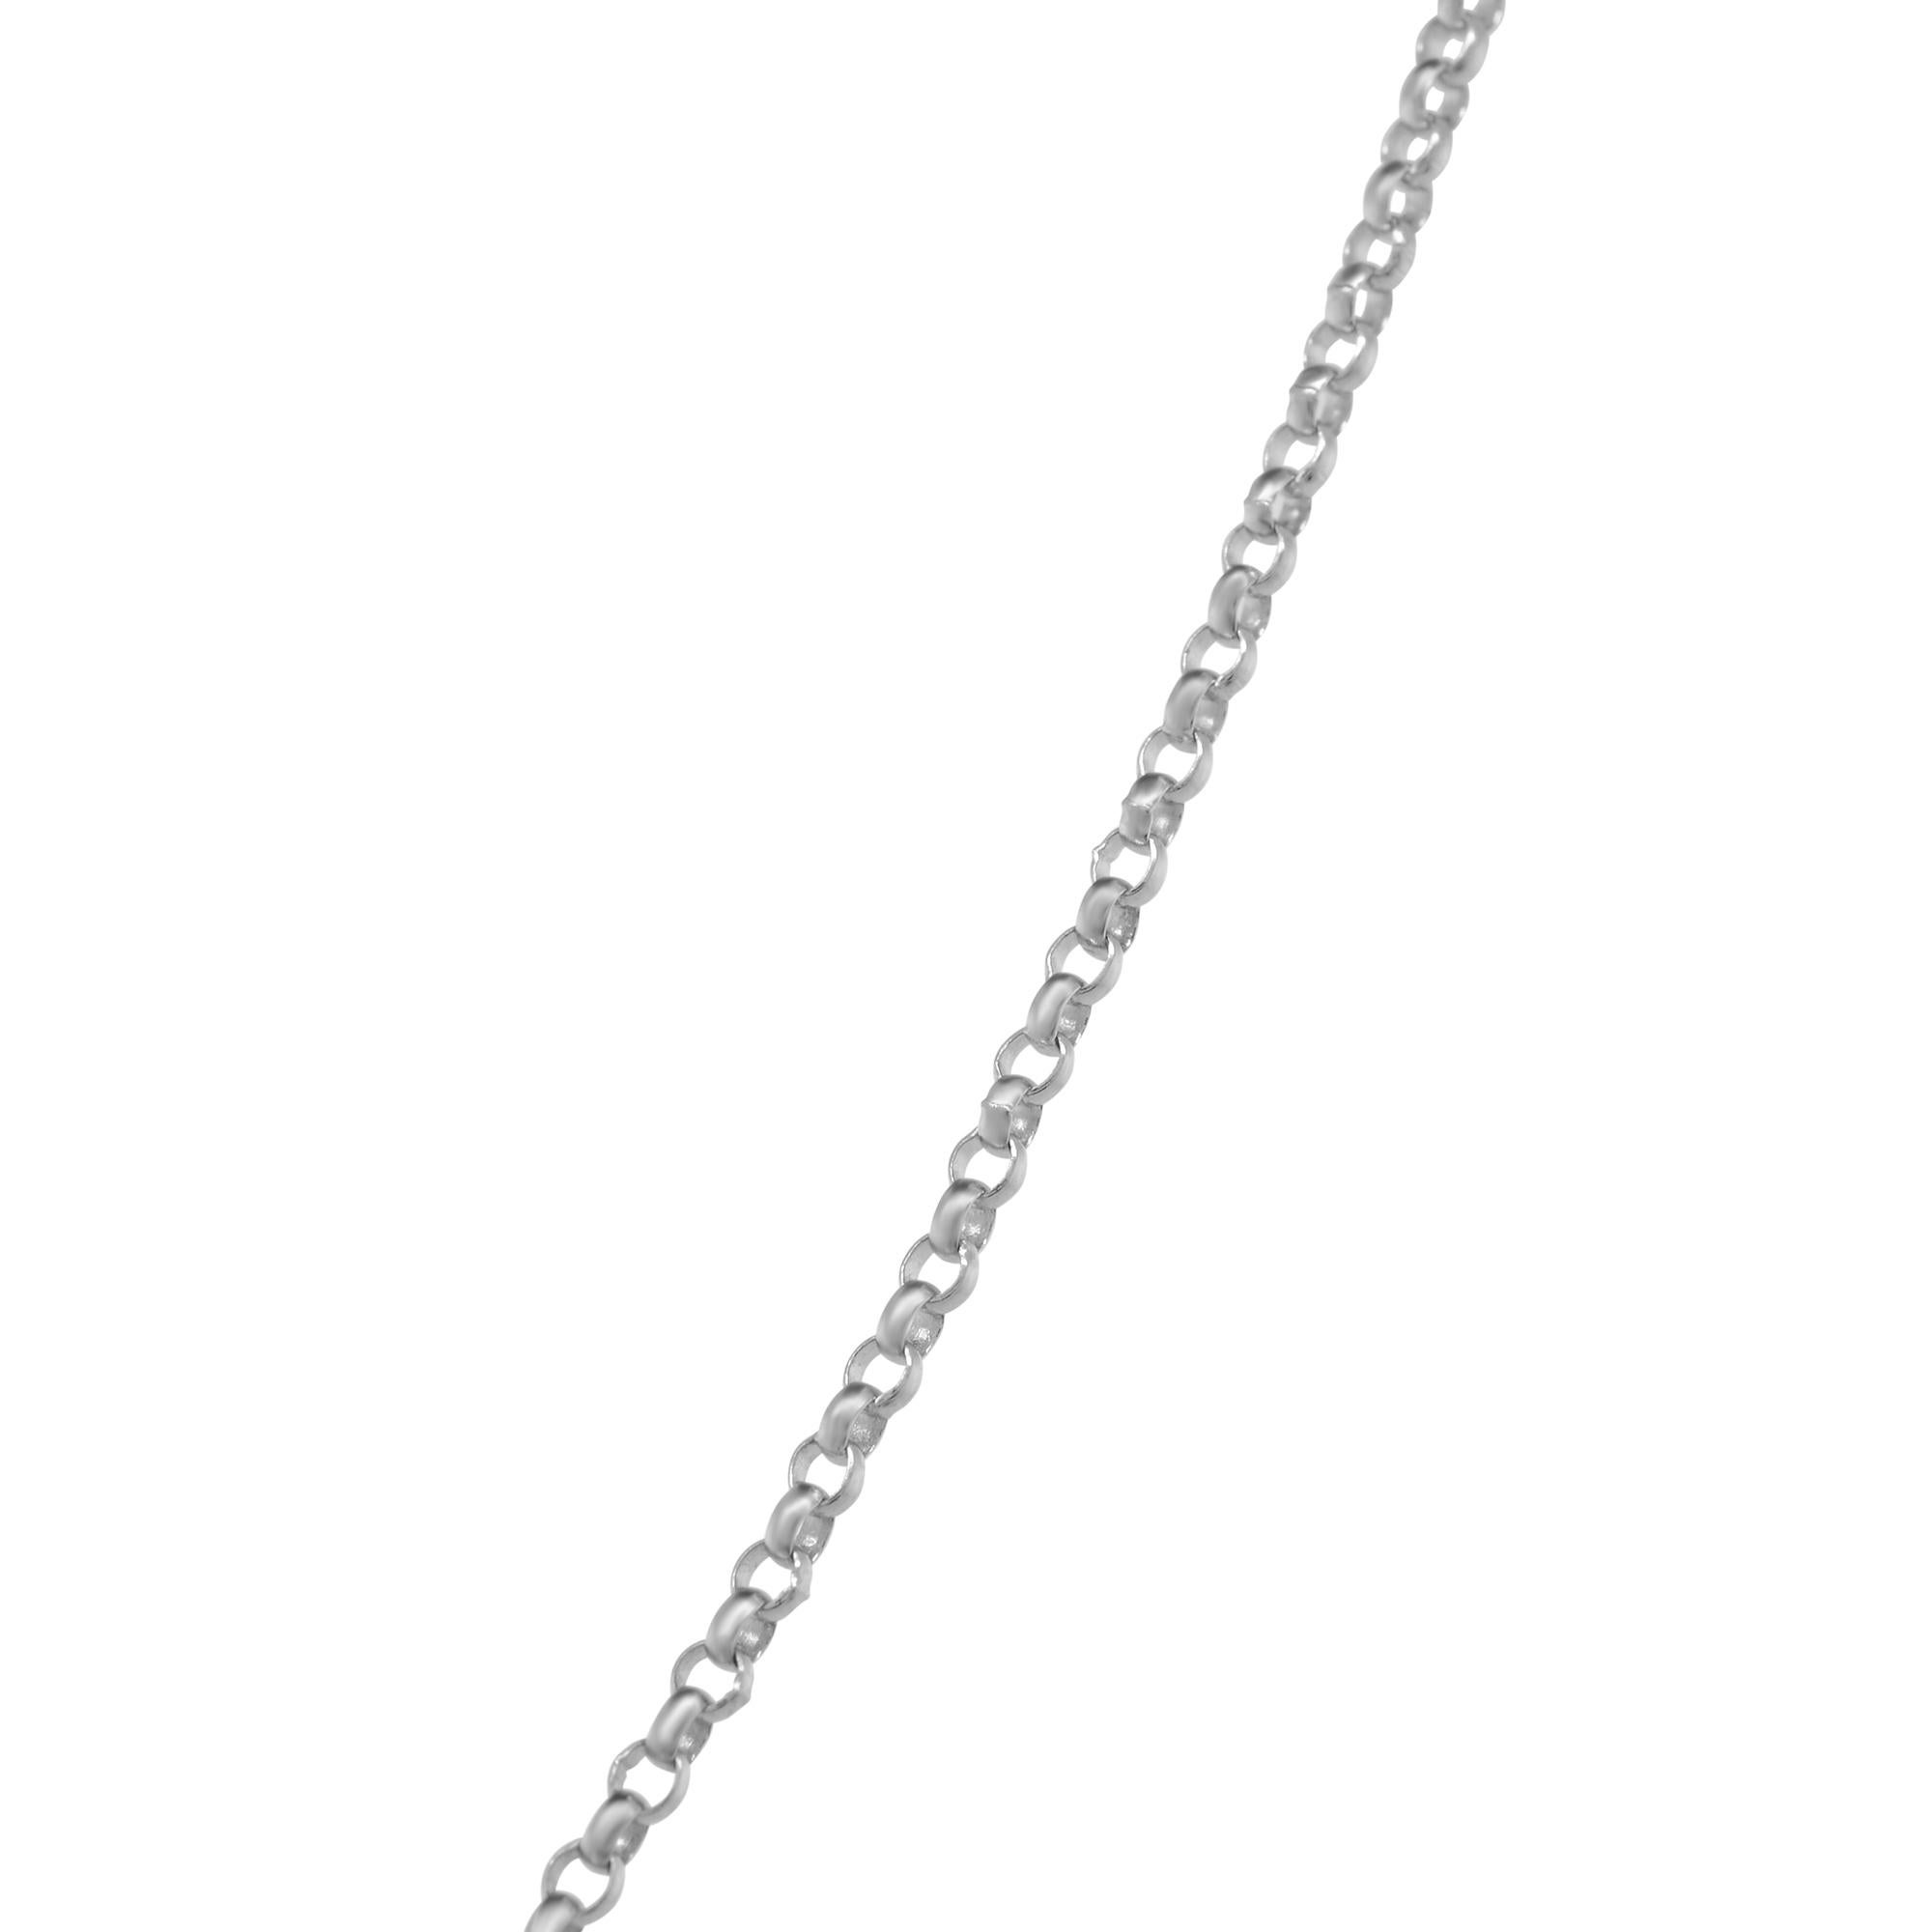 Round Cut Rachel Koen Horseshoe Diamond Charm Pendant Necklace 14k White Gold 0.20Cttw For Sale